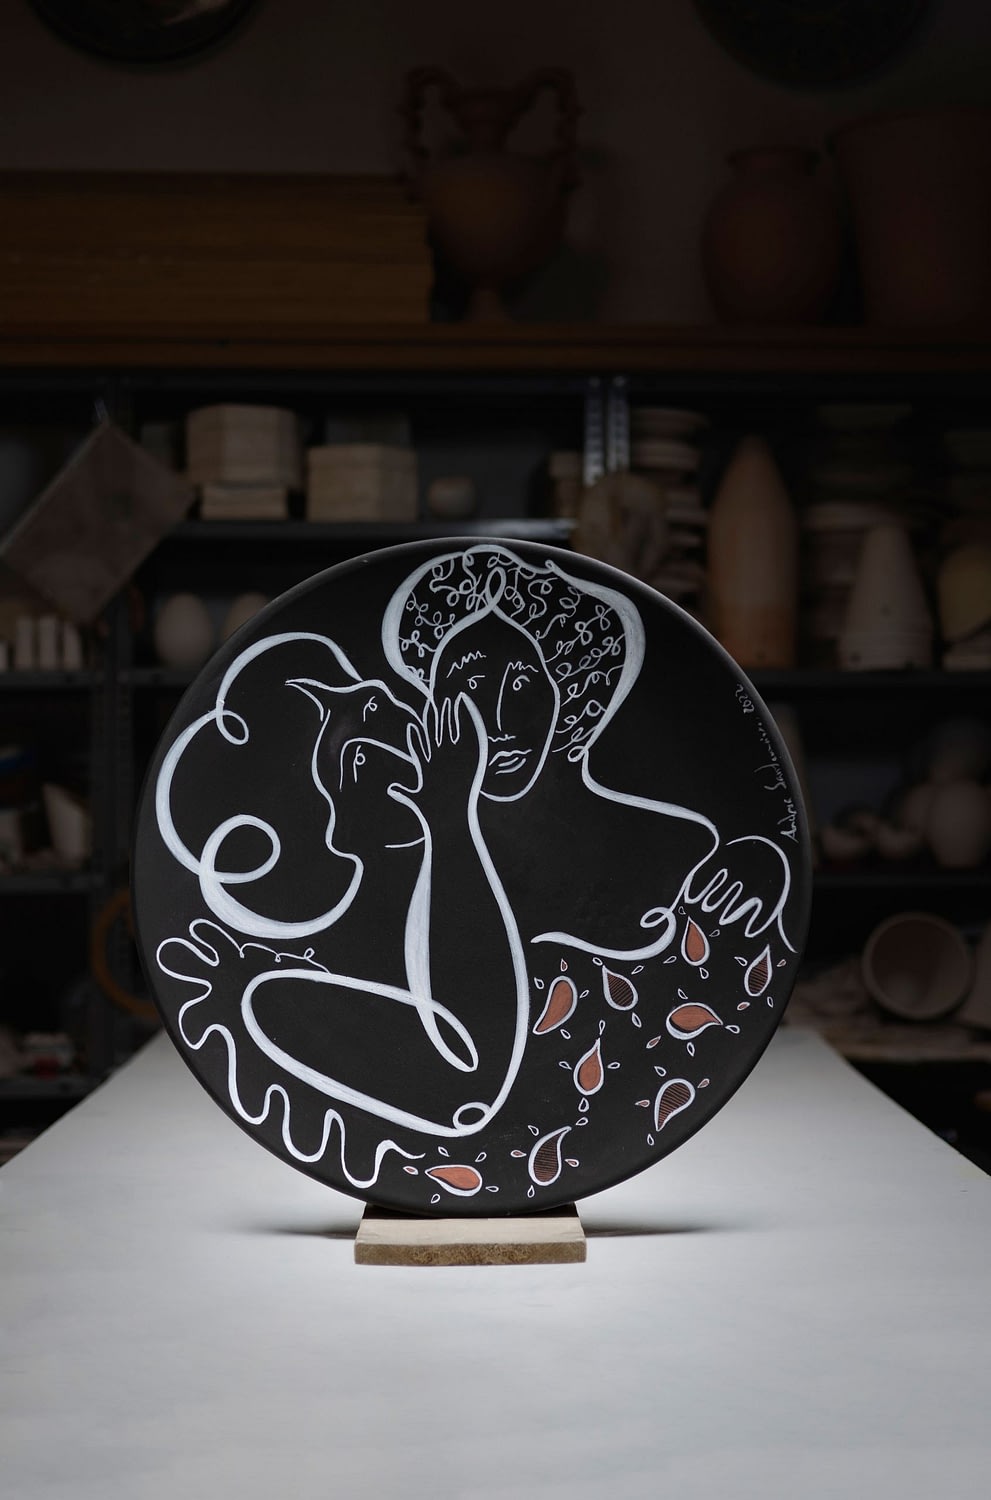 Andrea Santamarina Rossana Orlandi Mint Ceramics Hand painted ceramic Cerámica de san ginés Talavera de la Reina Lucas Amillano